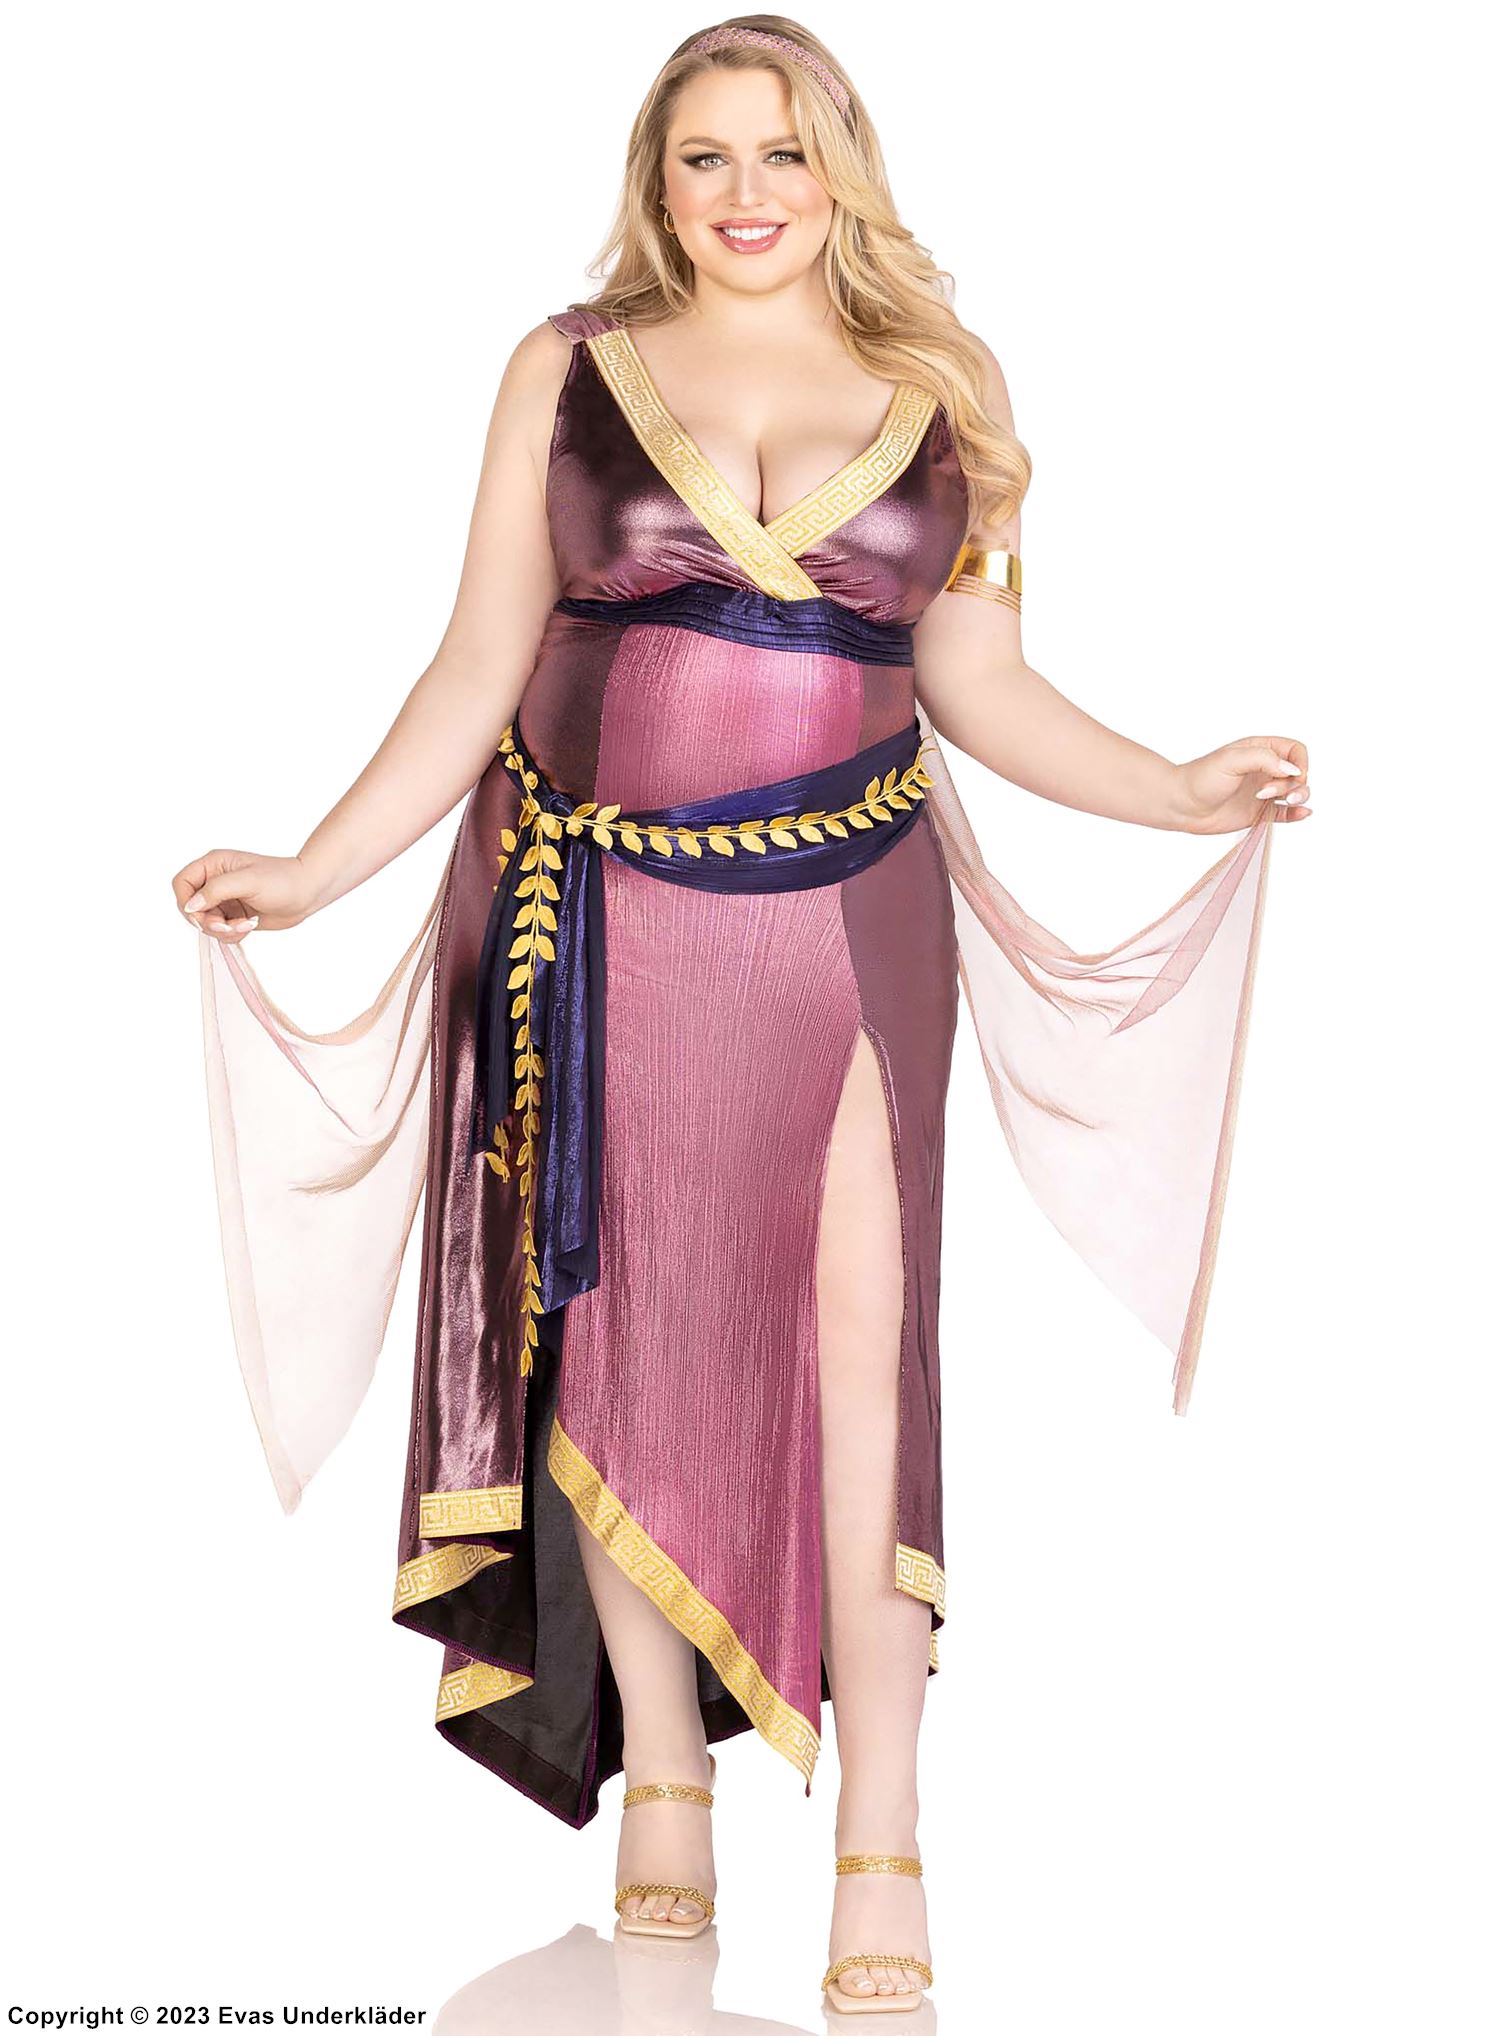 Goddess, costume dress, high slit, sash, plus size